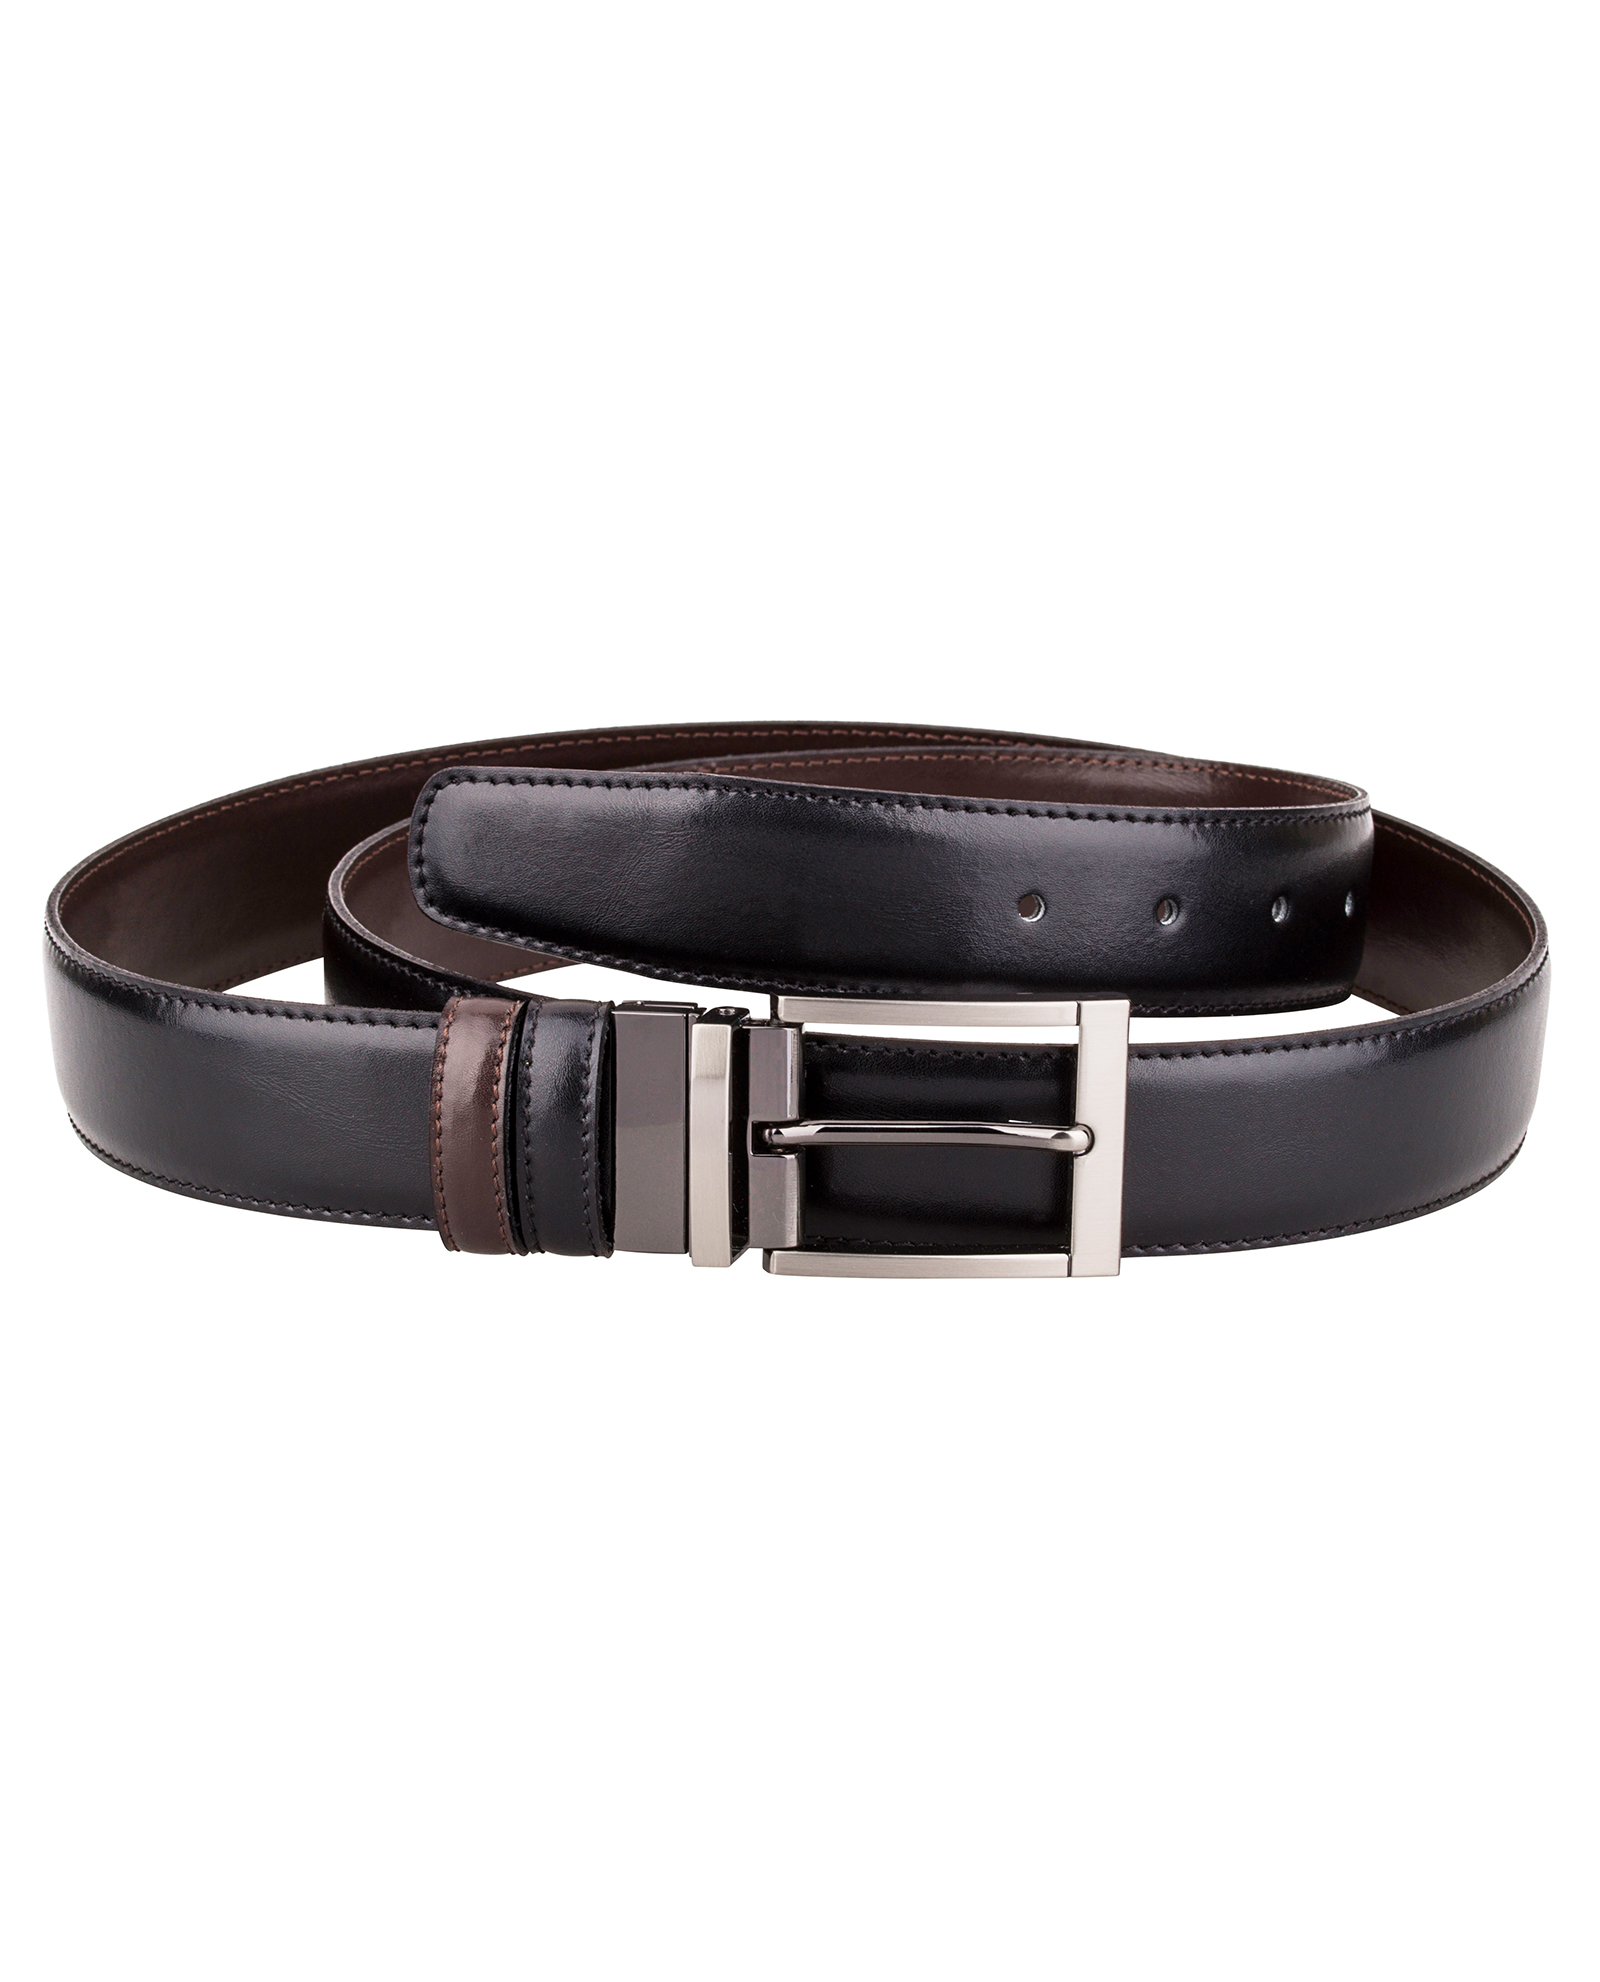 Buy Men's Reversible Leather Belt - Smooth Black Brown - Capo Pelle